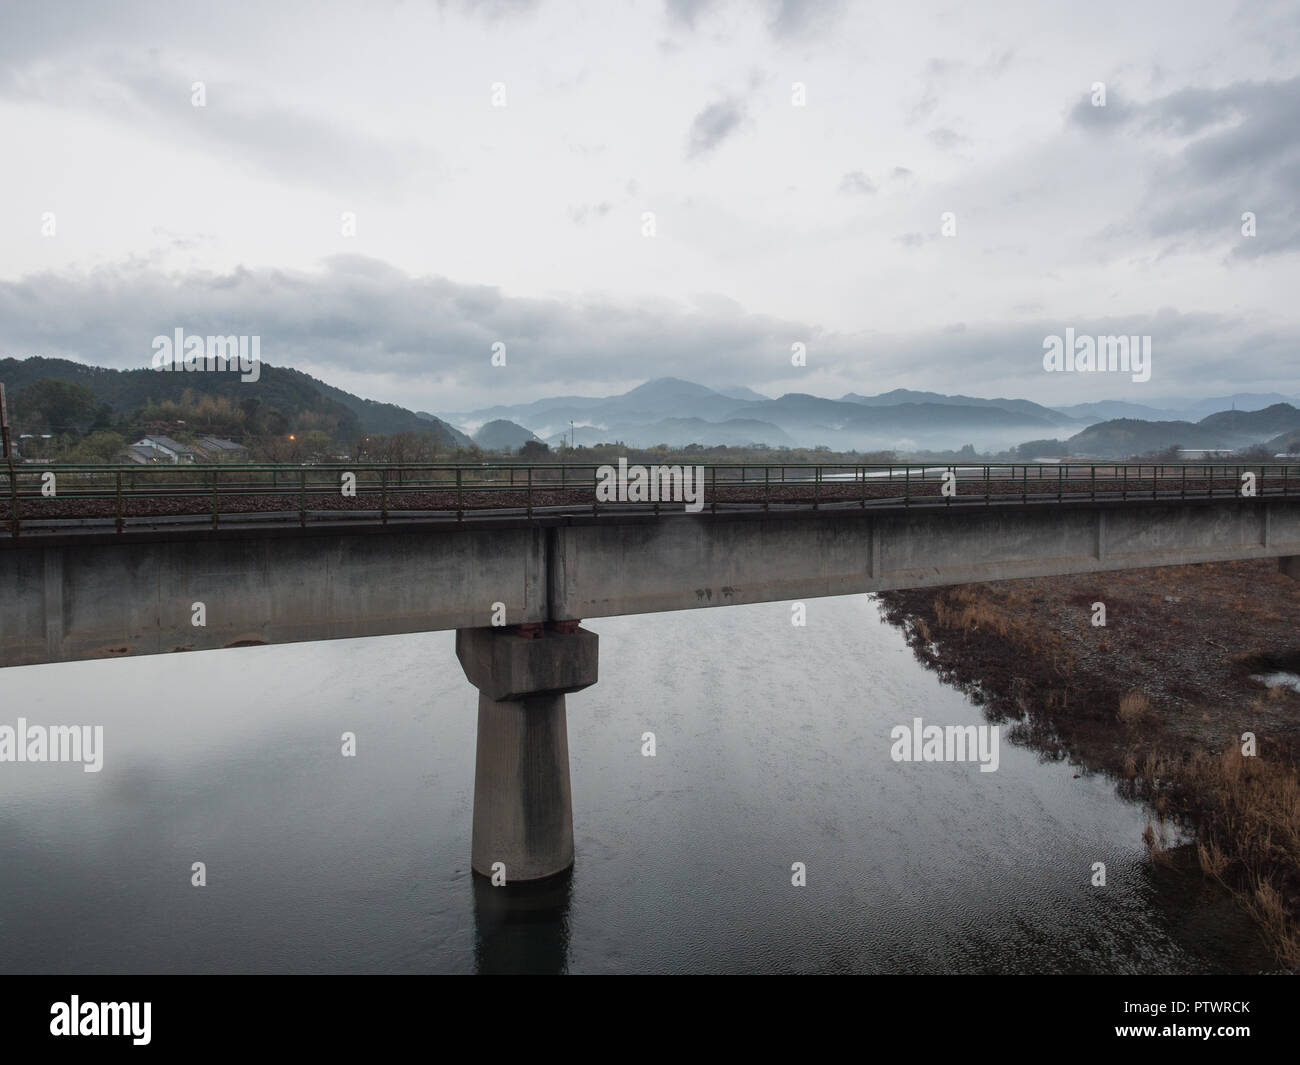 Railway bridge over Kaifu River, looking upstream, grey cloud sky and misty hils,  Tokushima, Japan Stock Photo